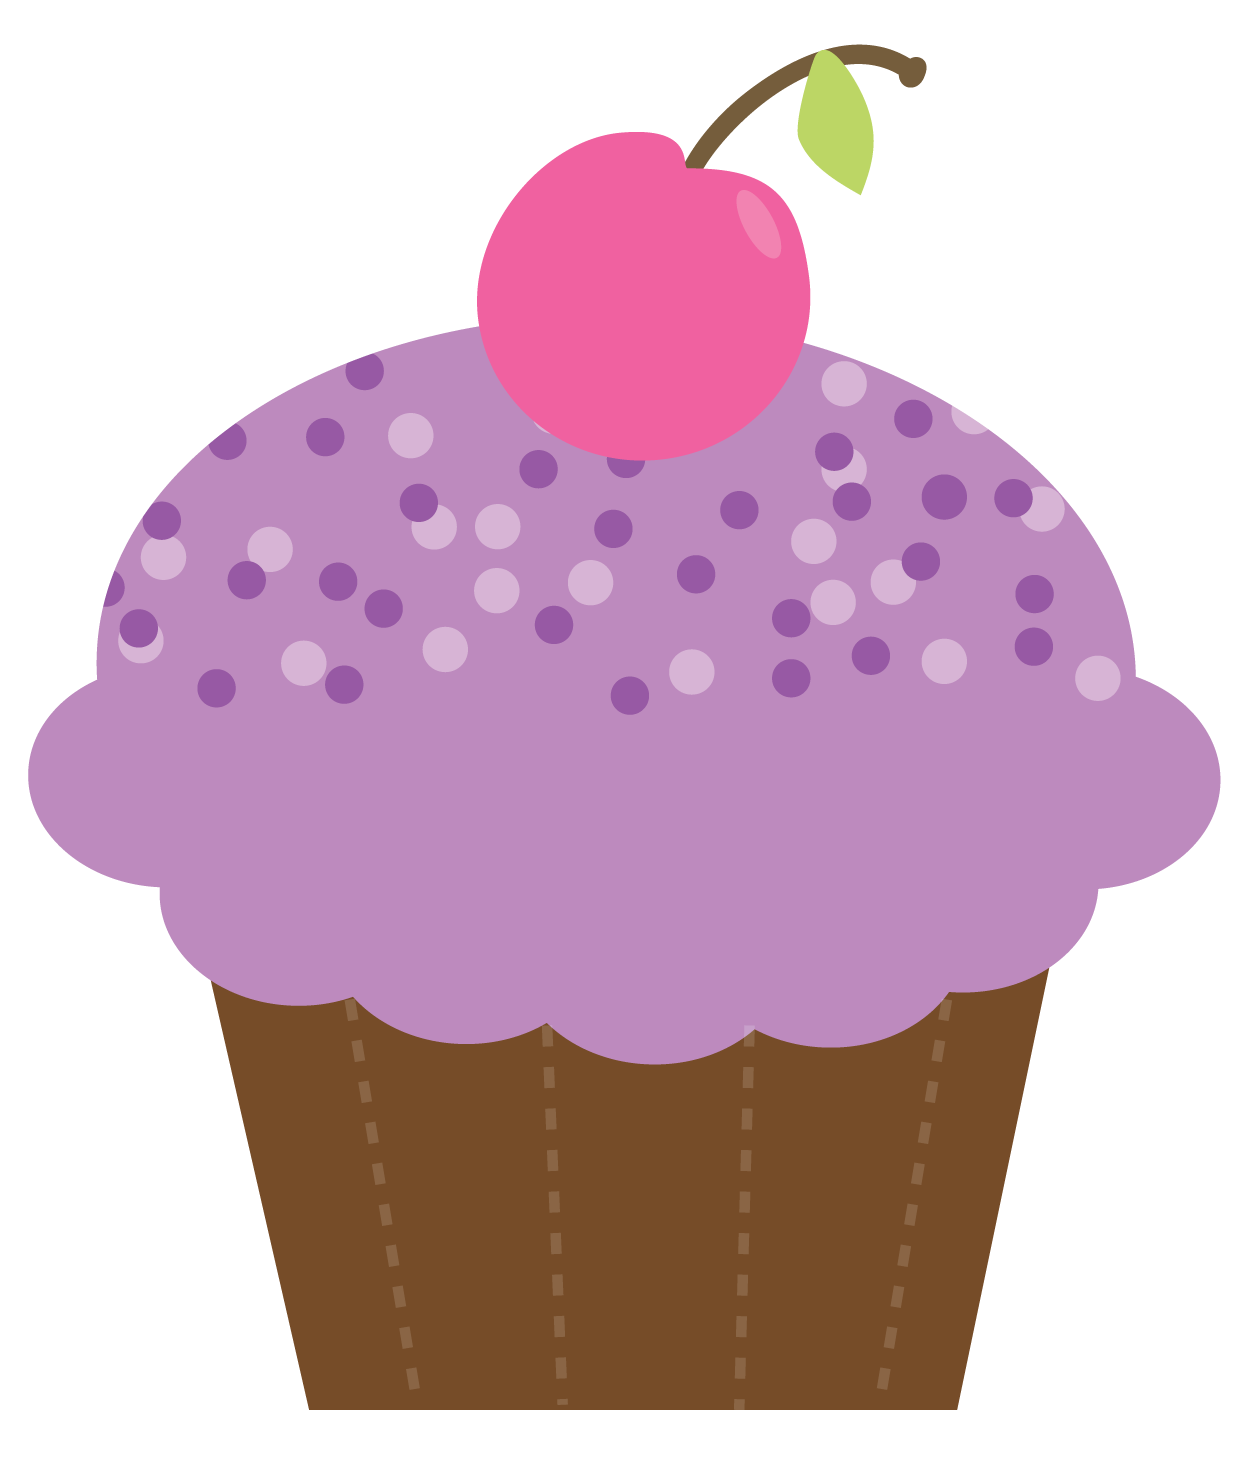 Cupcake Clip Art - Cupcakes Clip Art